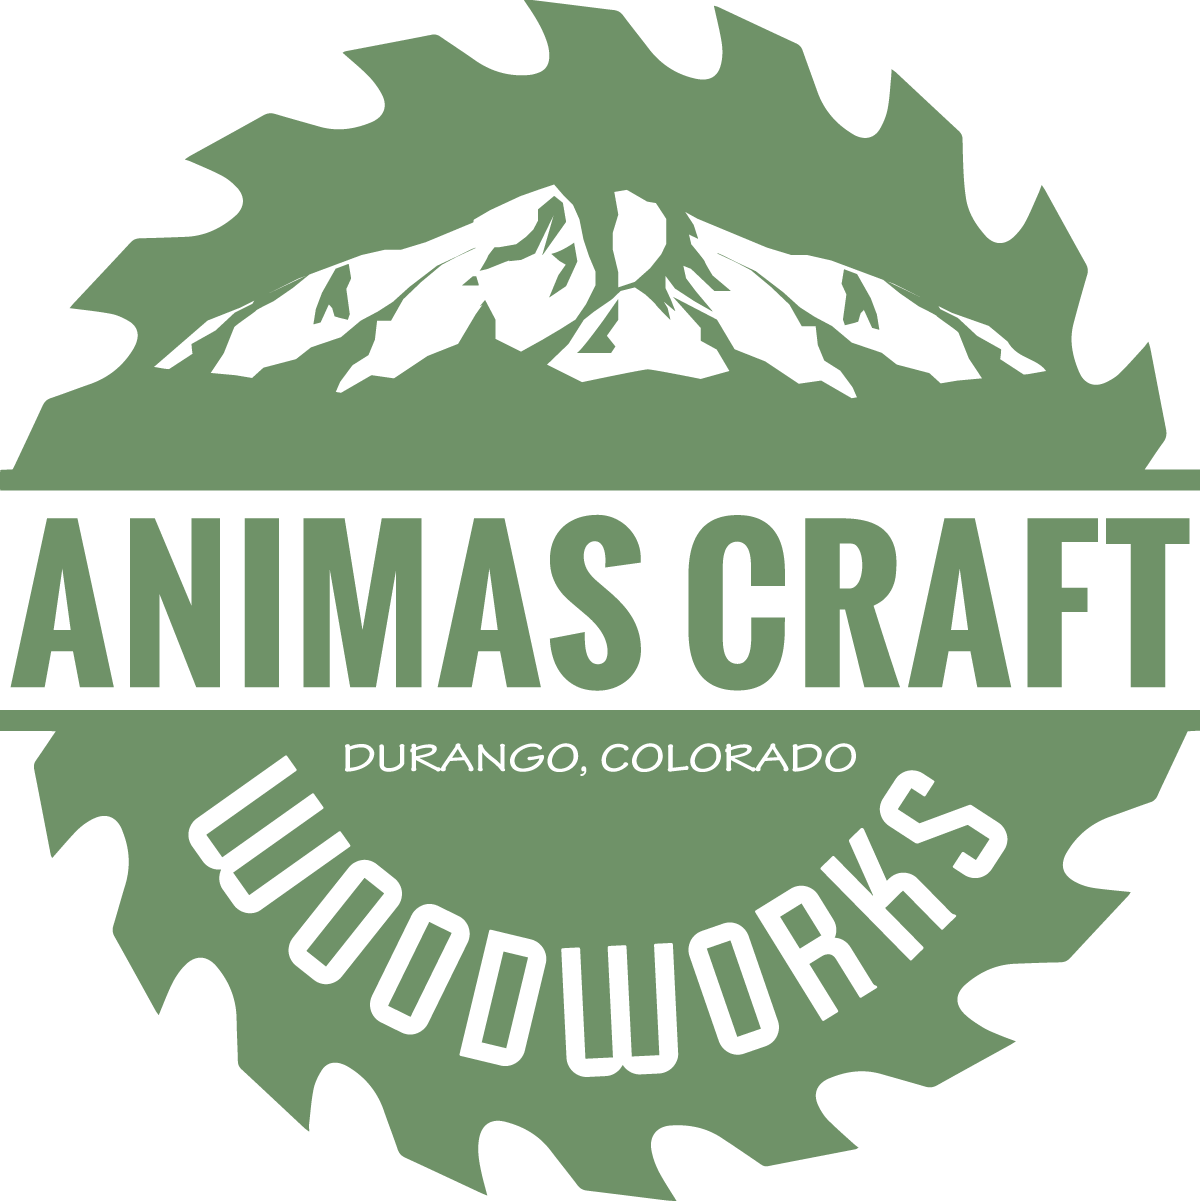 Animas Craft Woodworks